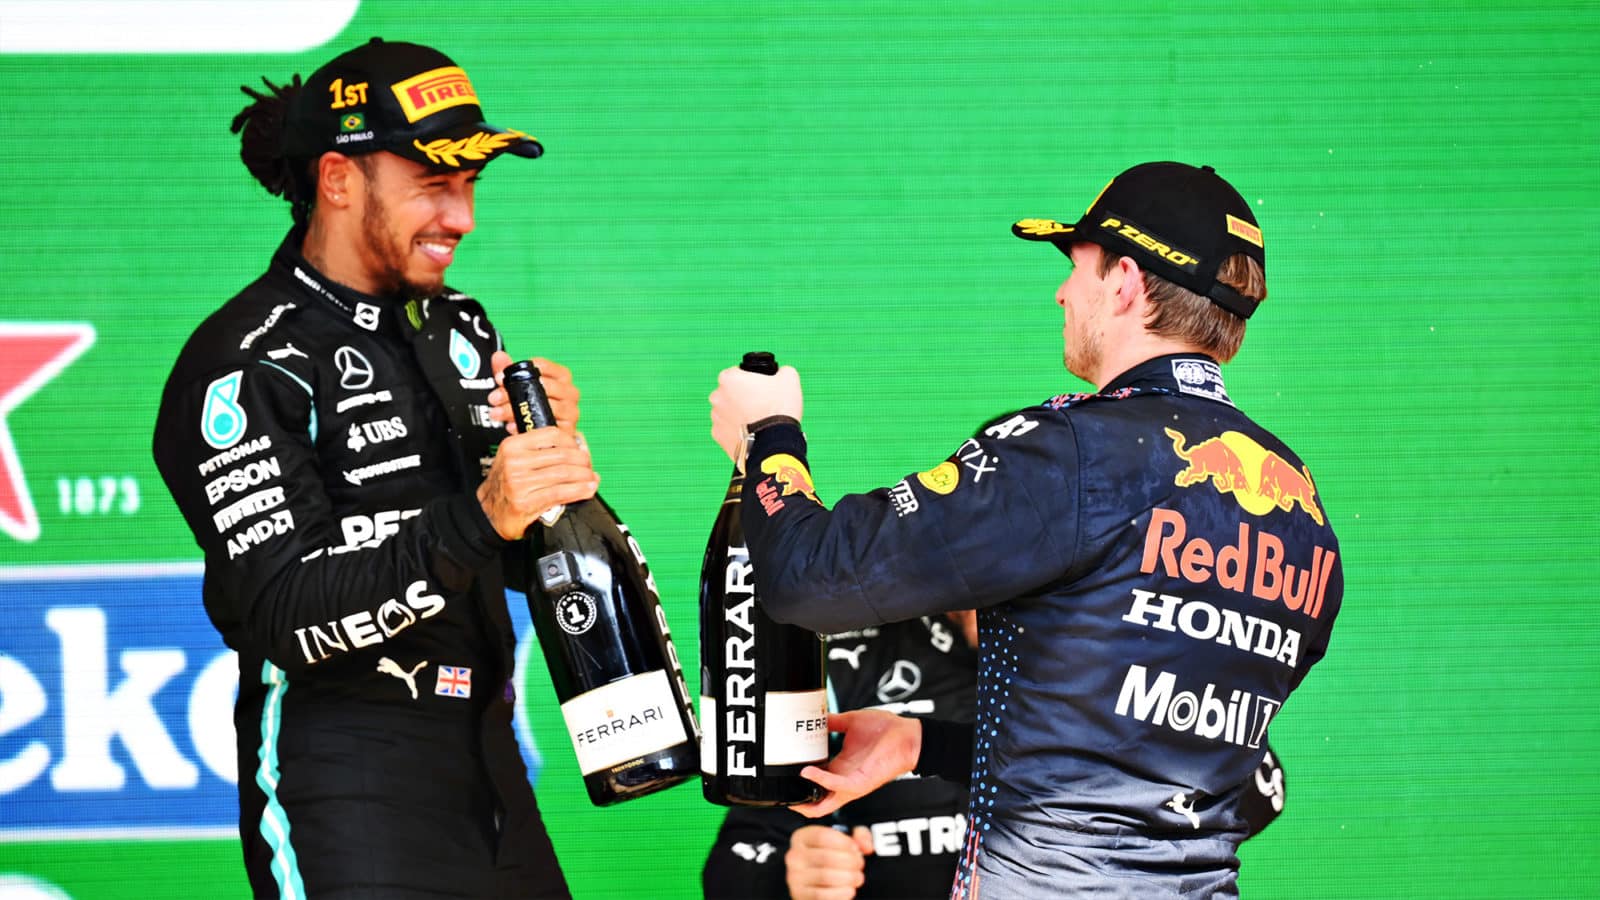 Lewis Hamilton and Max Verstapen on the podium at the 2021 Brazilian Grand Prix